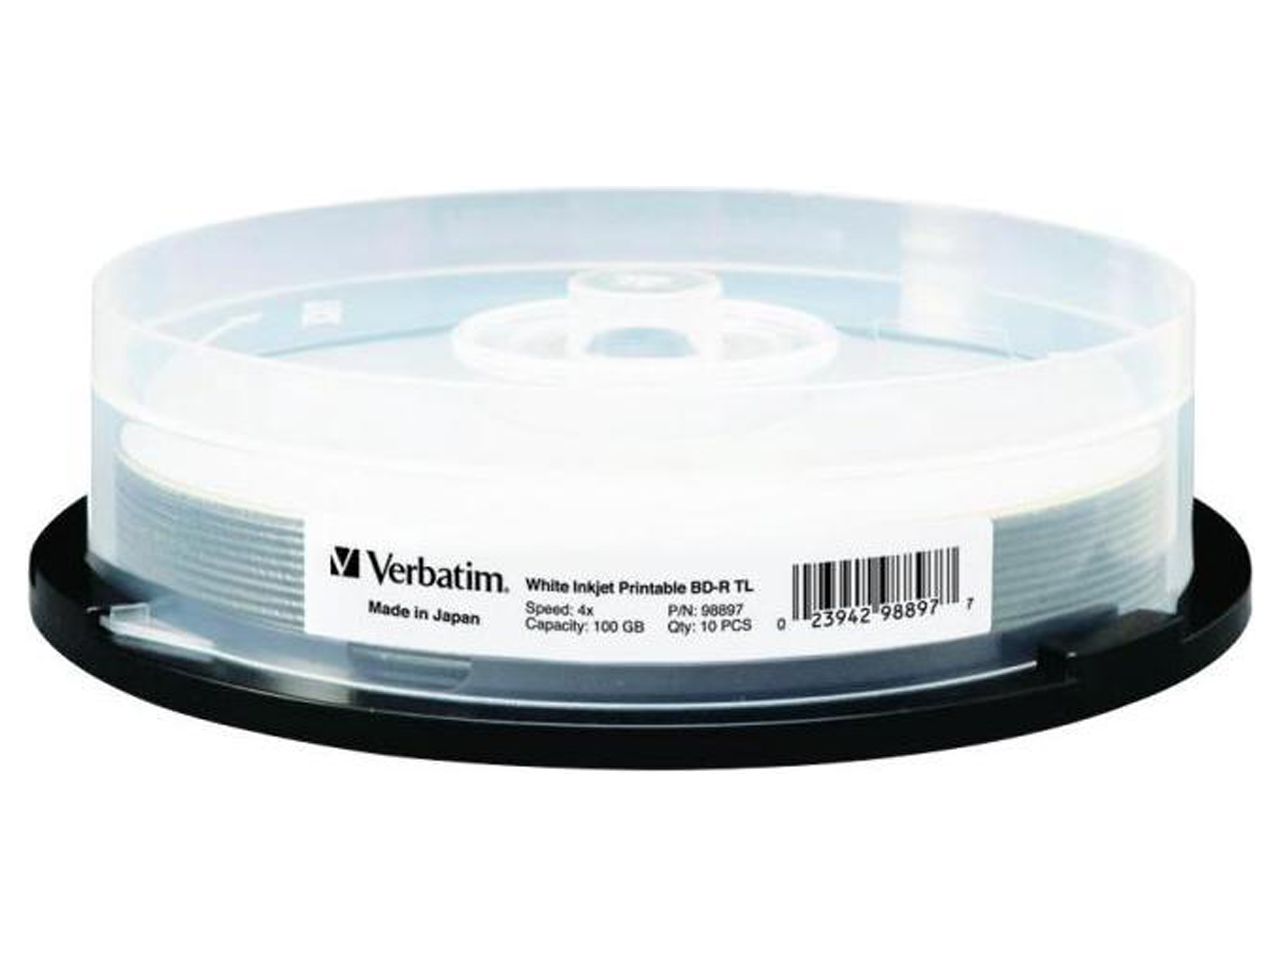 Verbatim Blu-ray Recordable Media - BD-R - 4x - 100 GB - 10 Pack Spindle - image 4 of 12